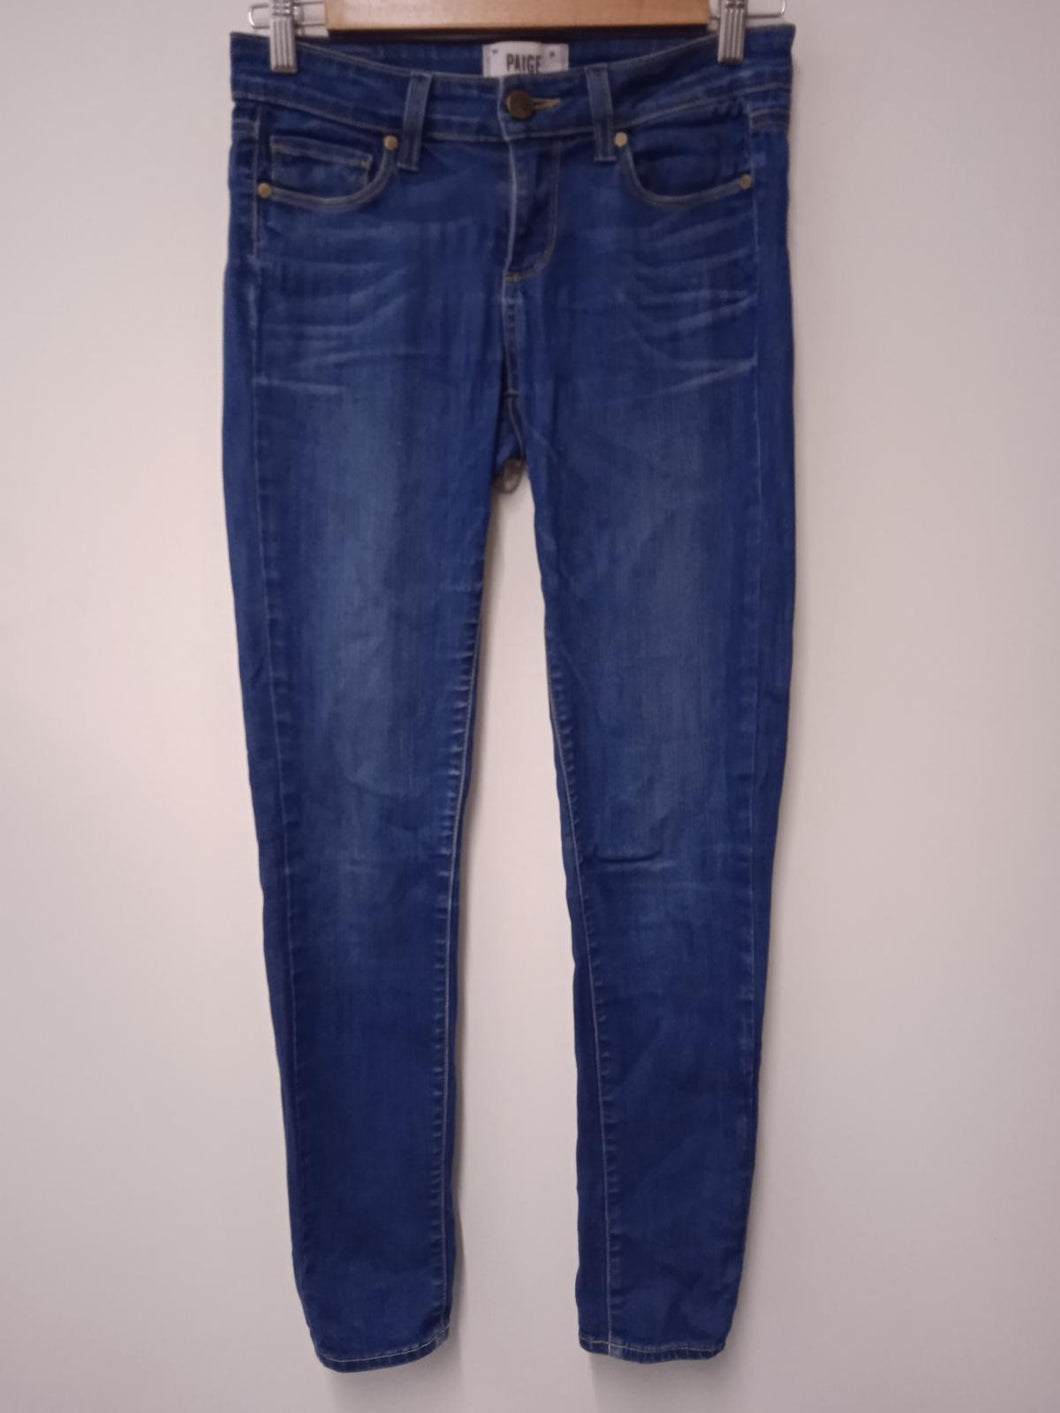 PAIGE Ladies Stargazer Blue Cotton Blend Verdugo Ultra Skinny Jeans Size 26